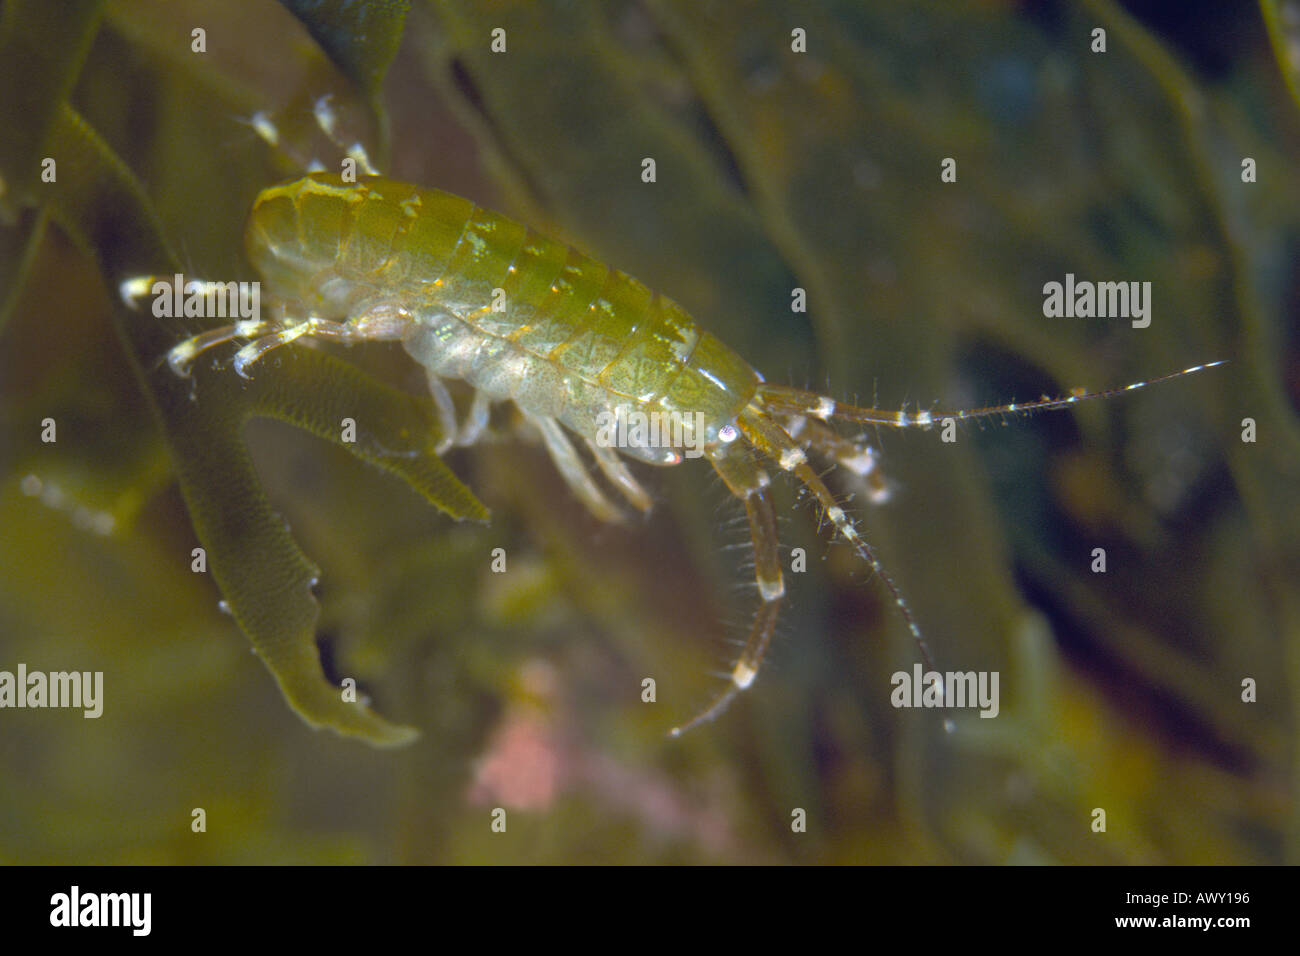 Amphipod, Gammarus sp. On alga. Underwater Stock Photo